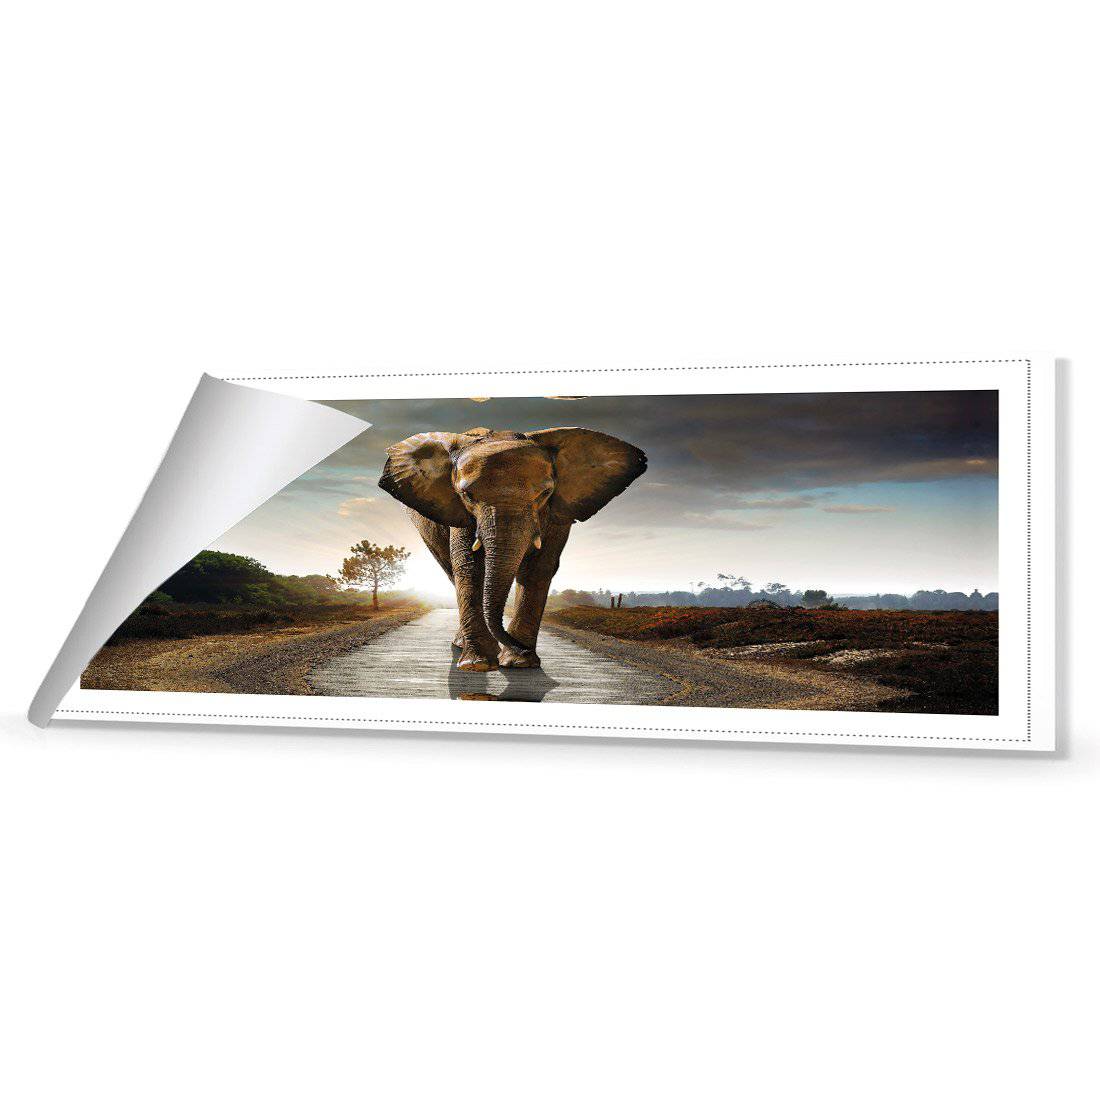 Determined Elephant (Long) Canvas Art-Canvas-Wall Art Designs-60x20cm-Rolled Canvas-Wall Art Designs